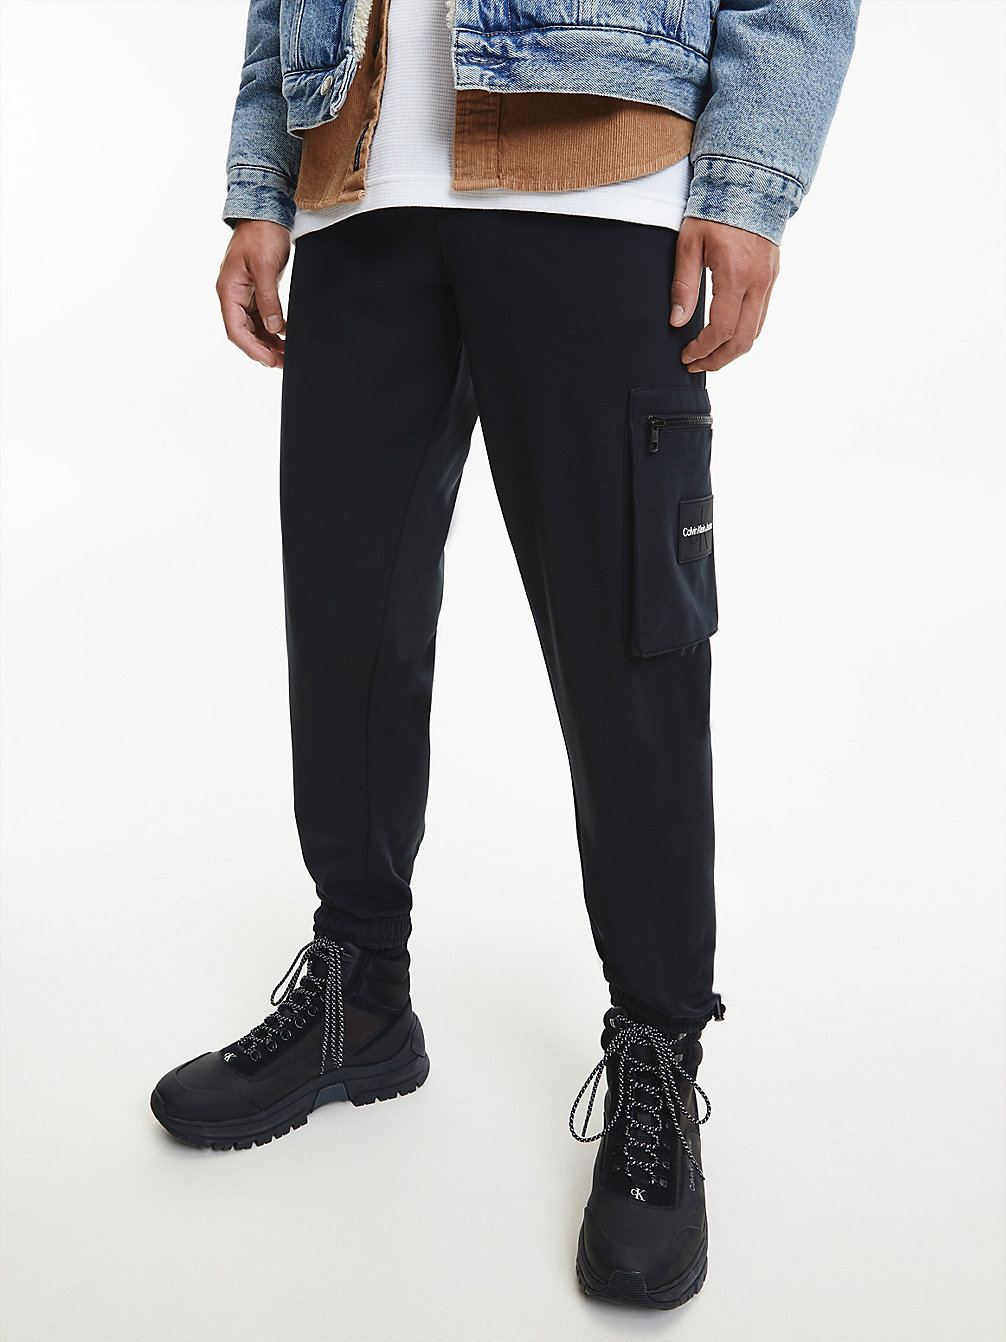 CK BLACK Pantalon De Jogging Cargo undefined hommes Calvin Klein